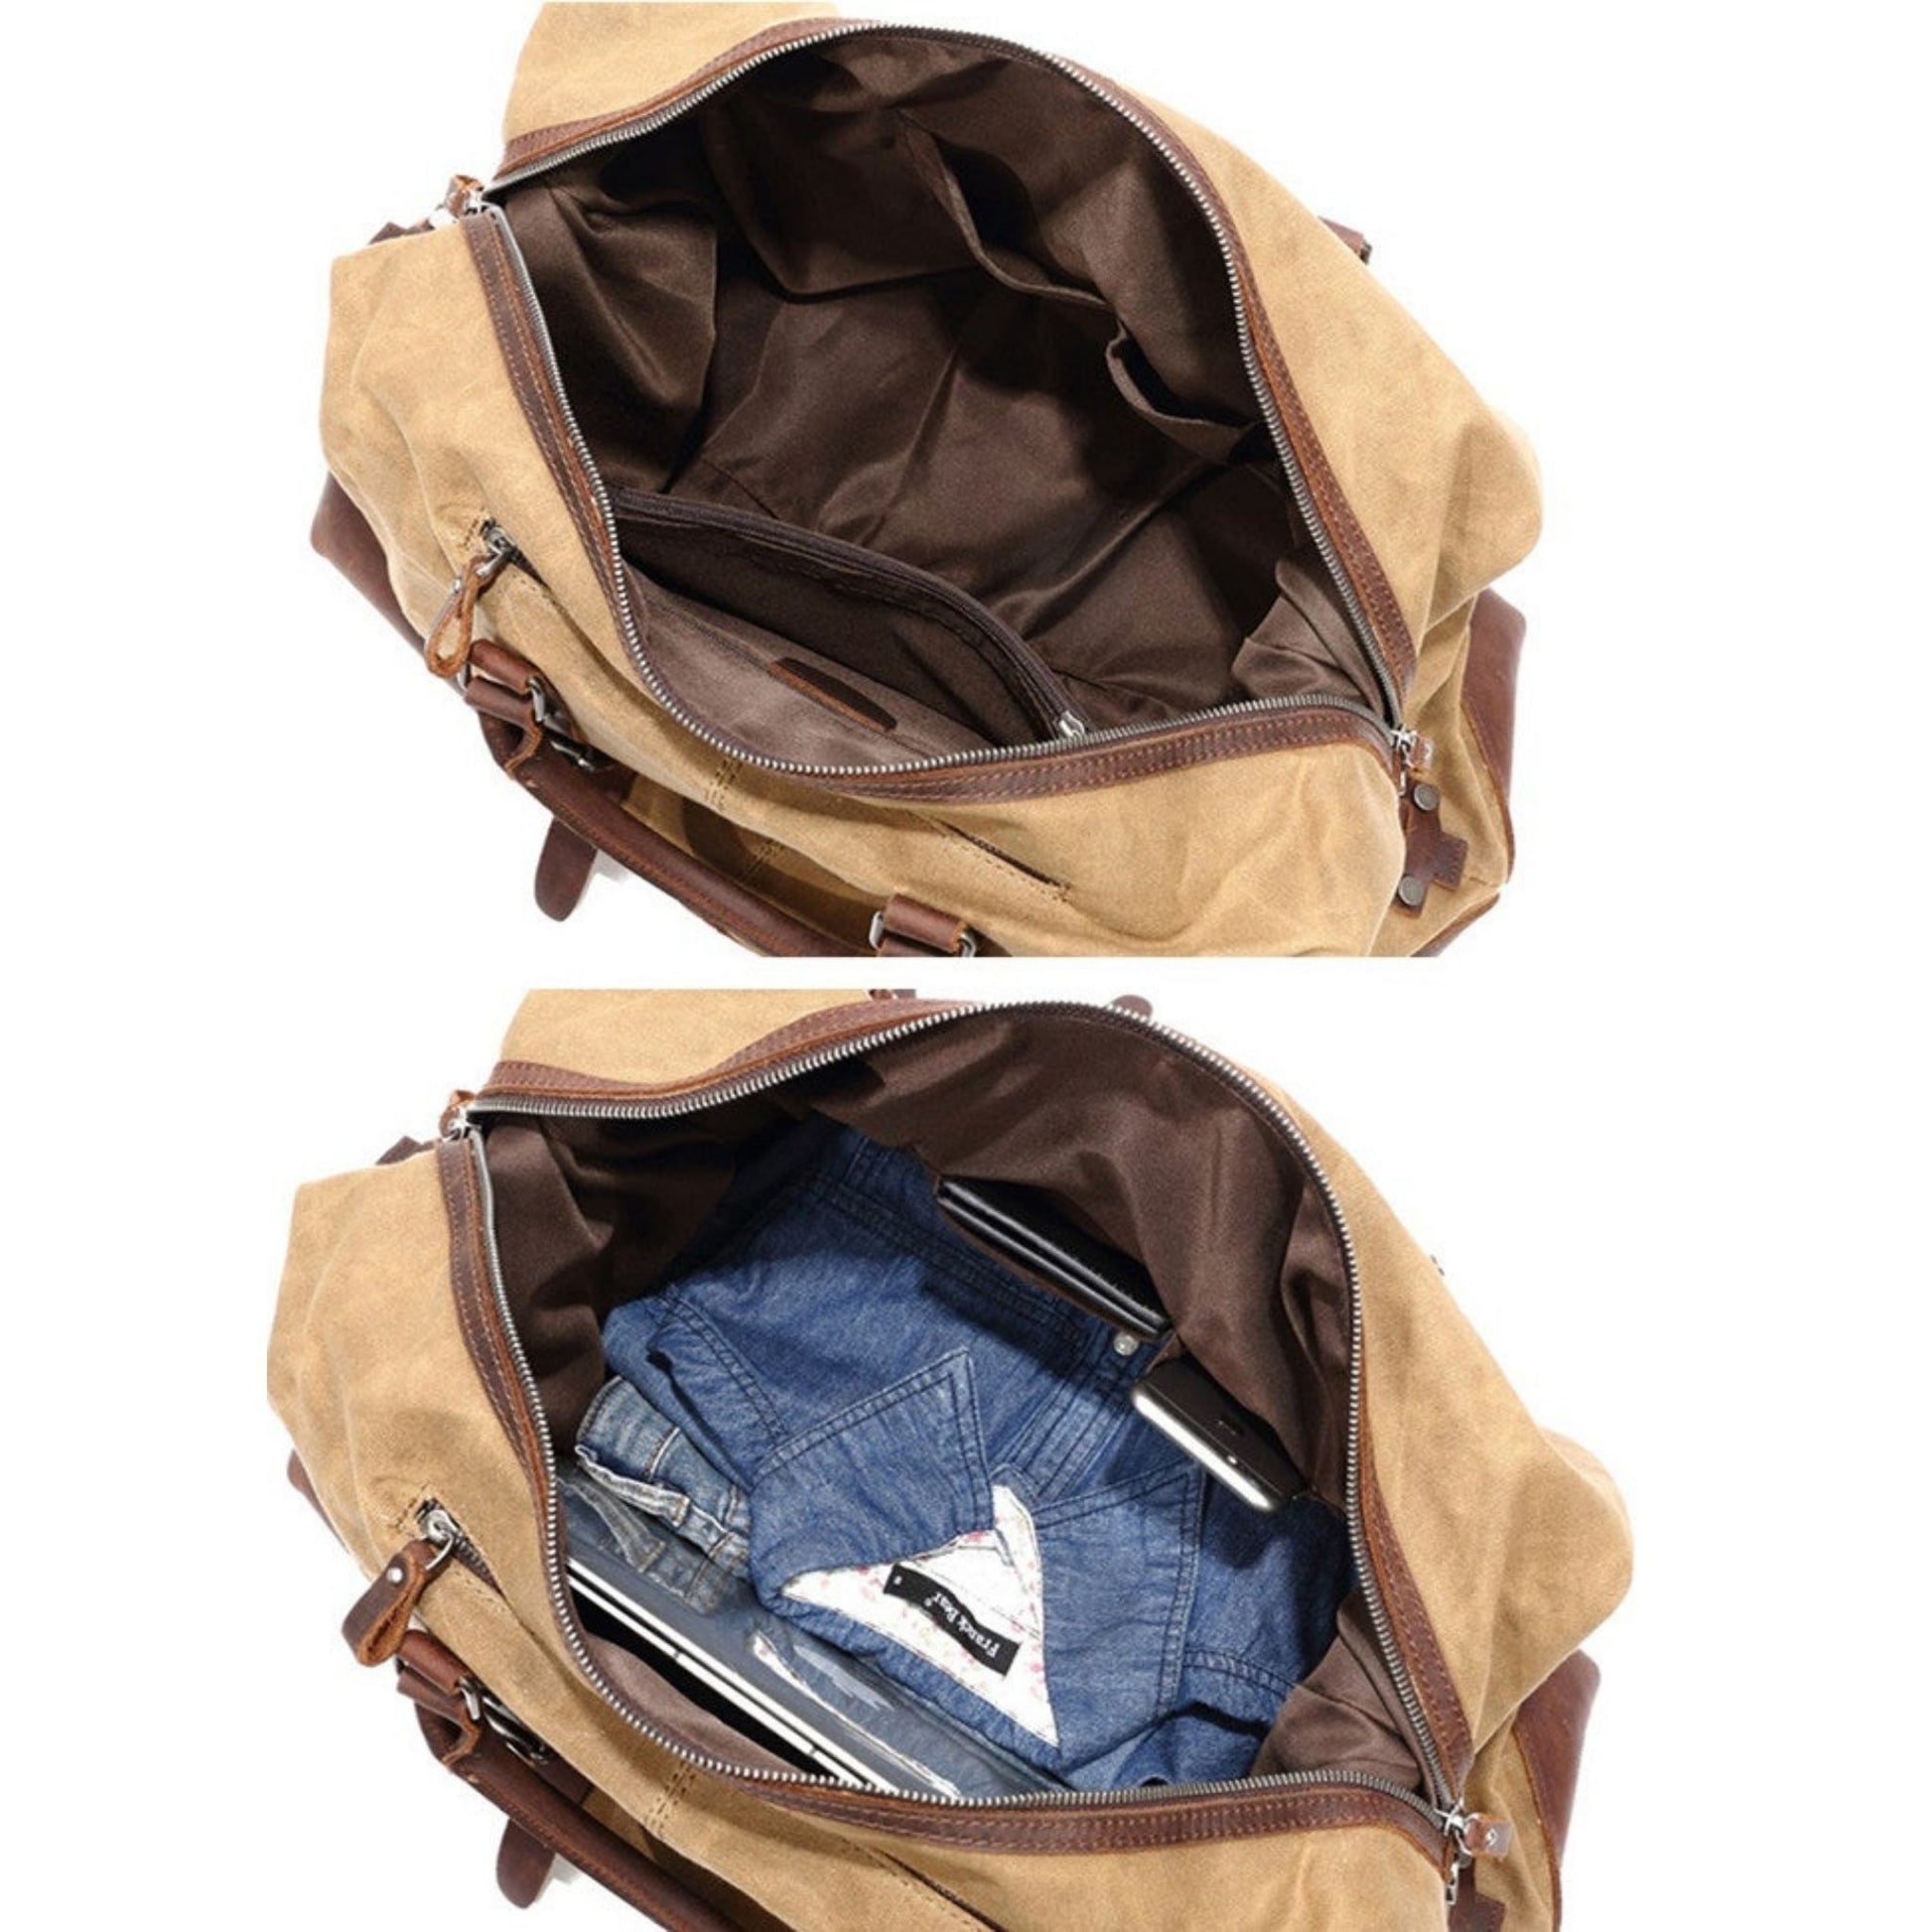 Waterproof Waxed Canvas Leather Travel Duffel Bag - Blue Sebe Handmade Leather Bags